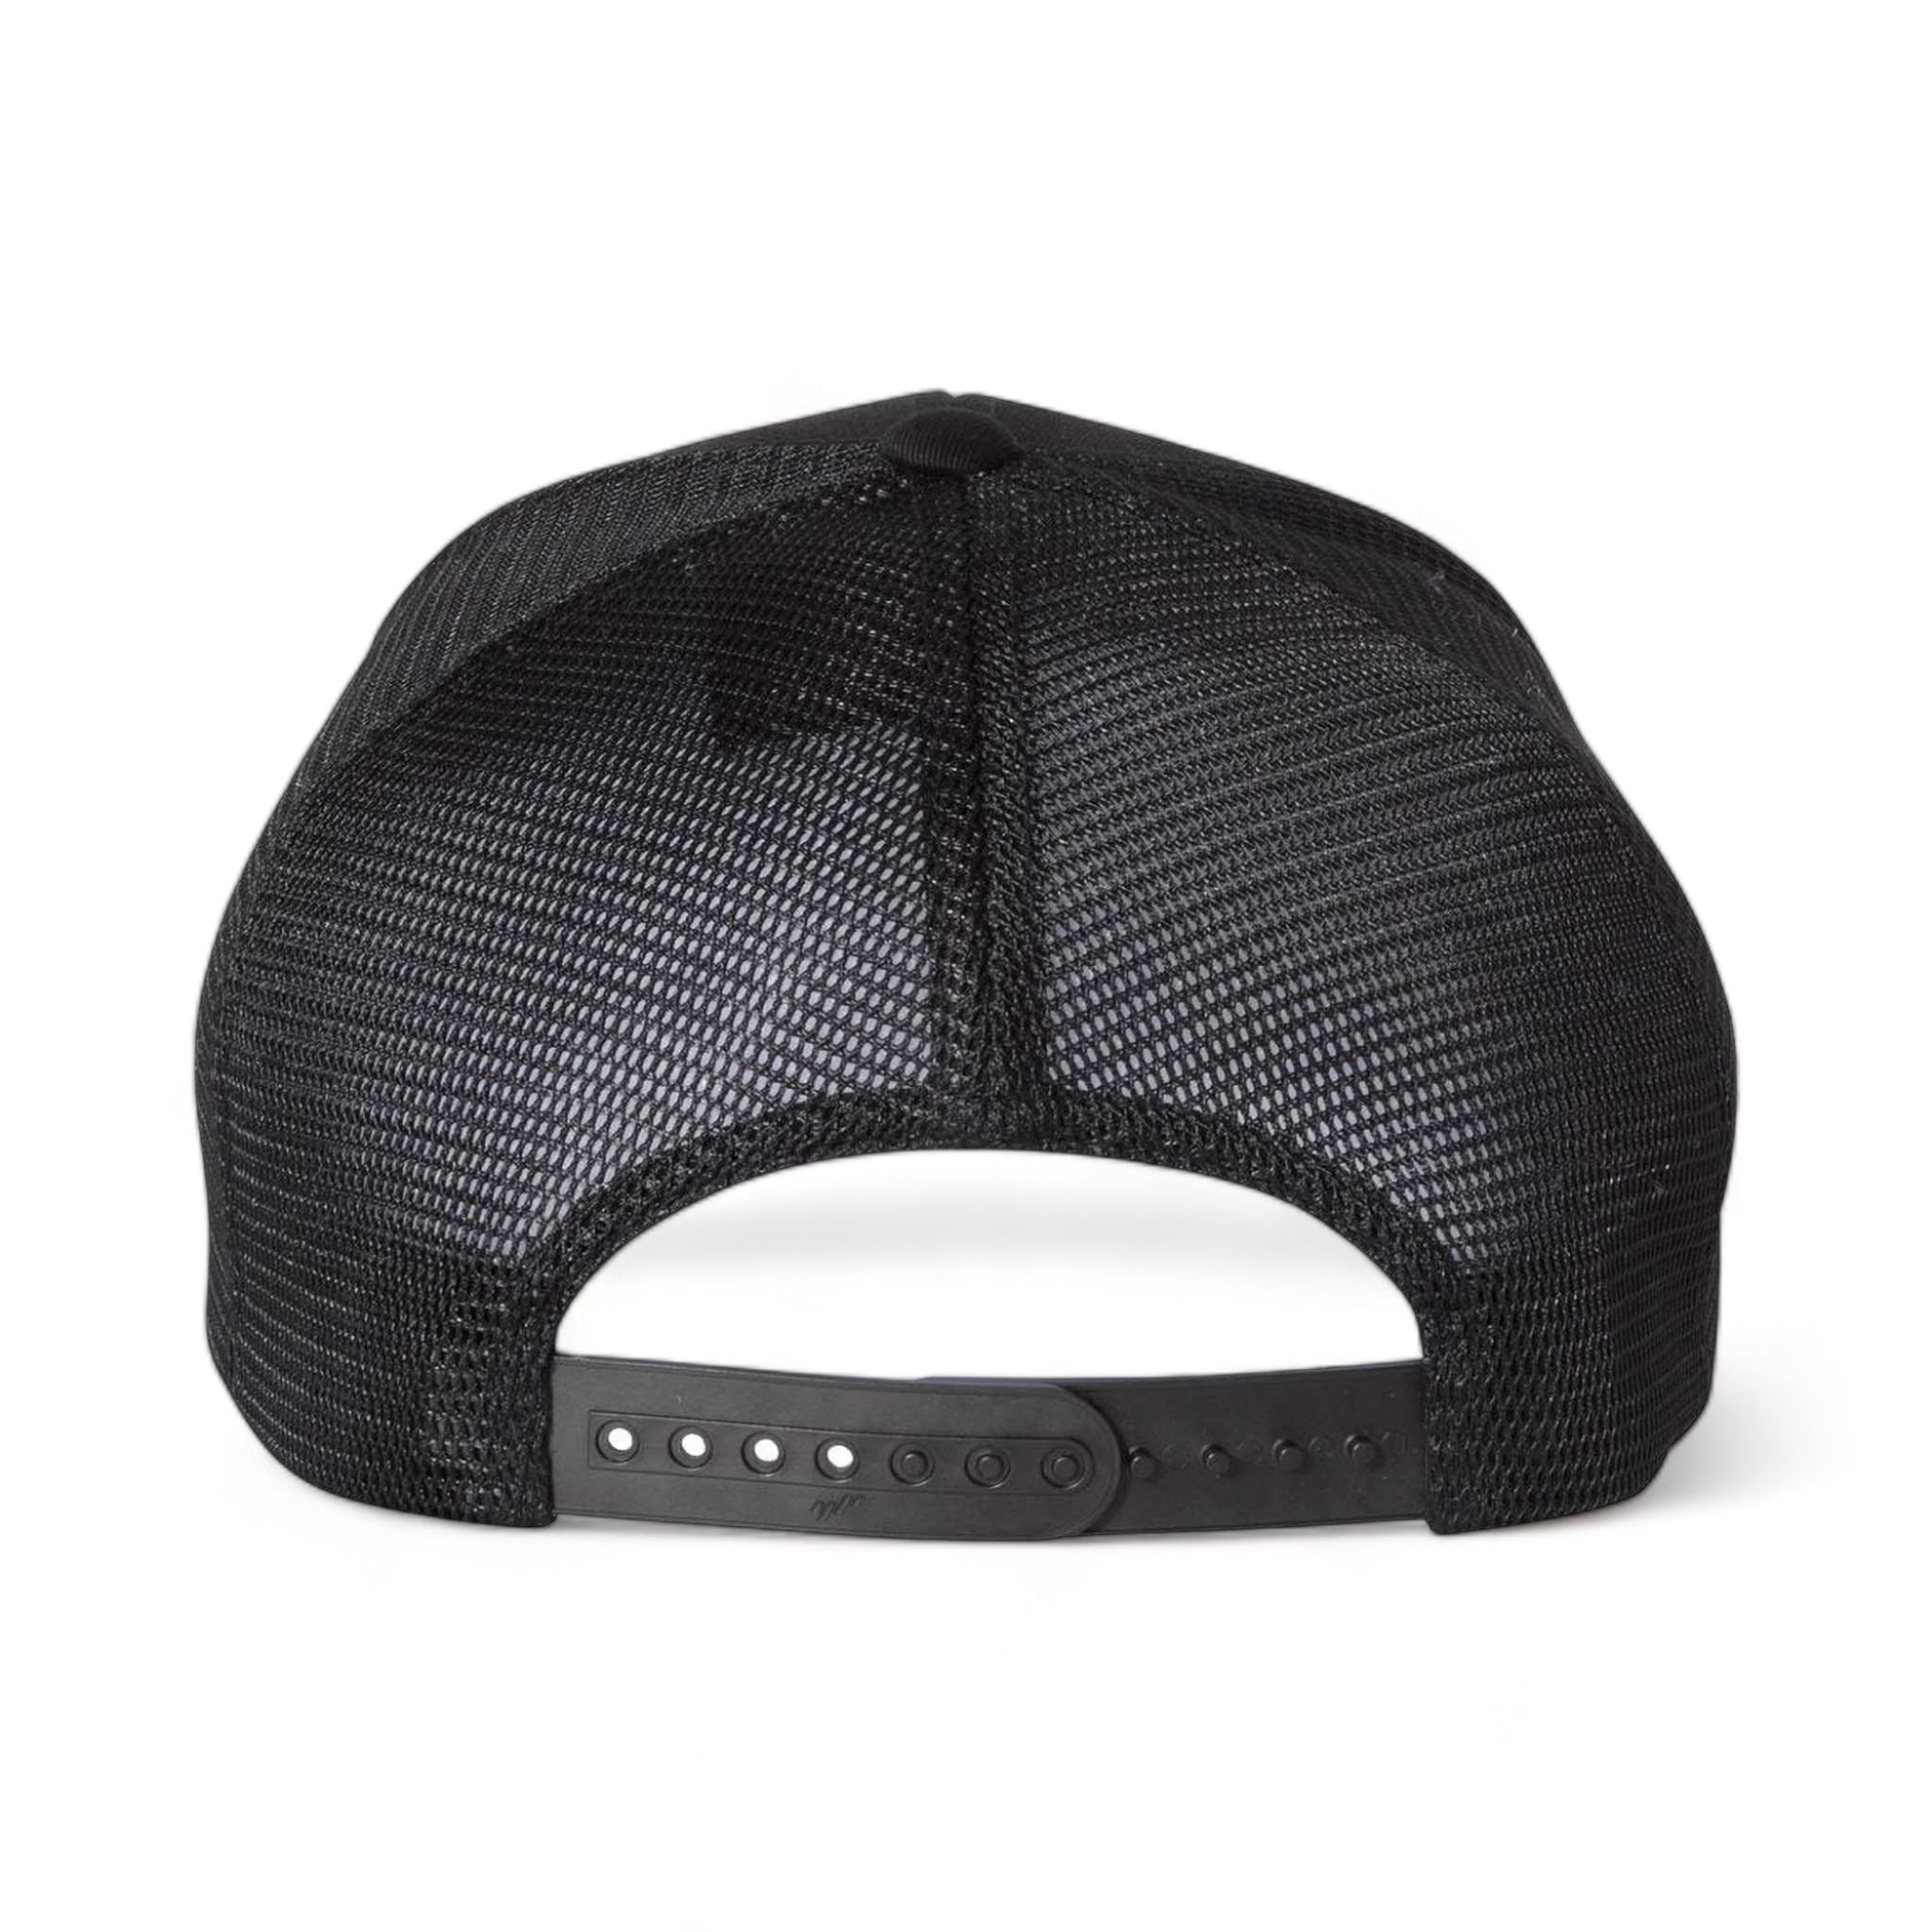 Back view of Flexfit 110M custom hat in black